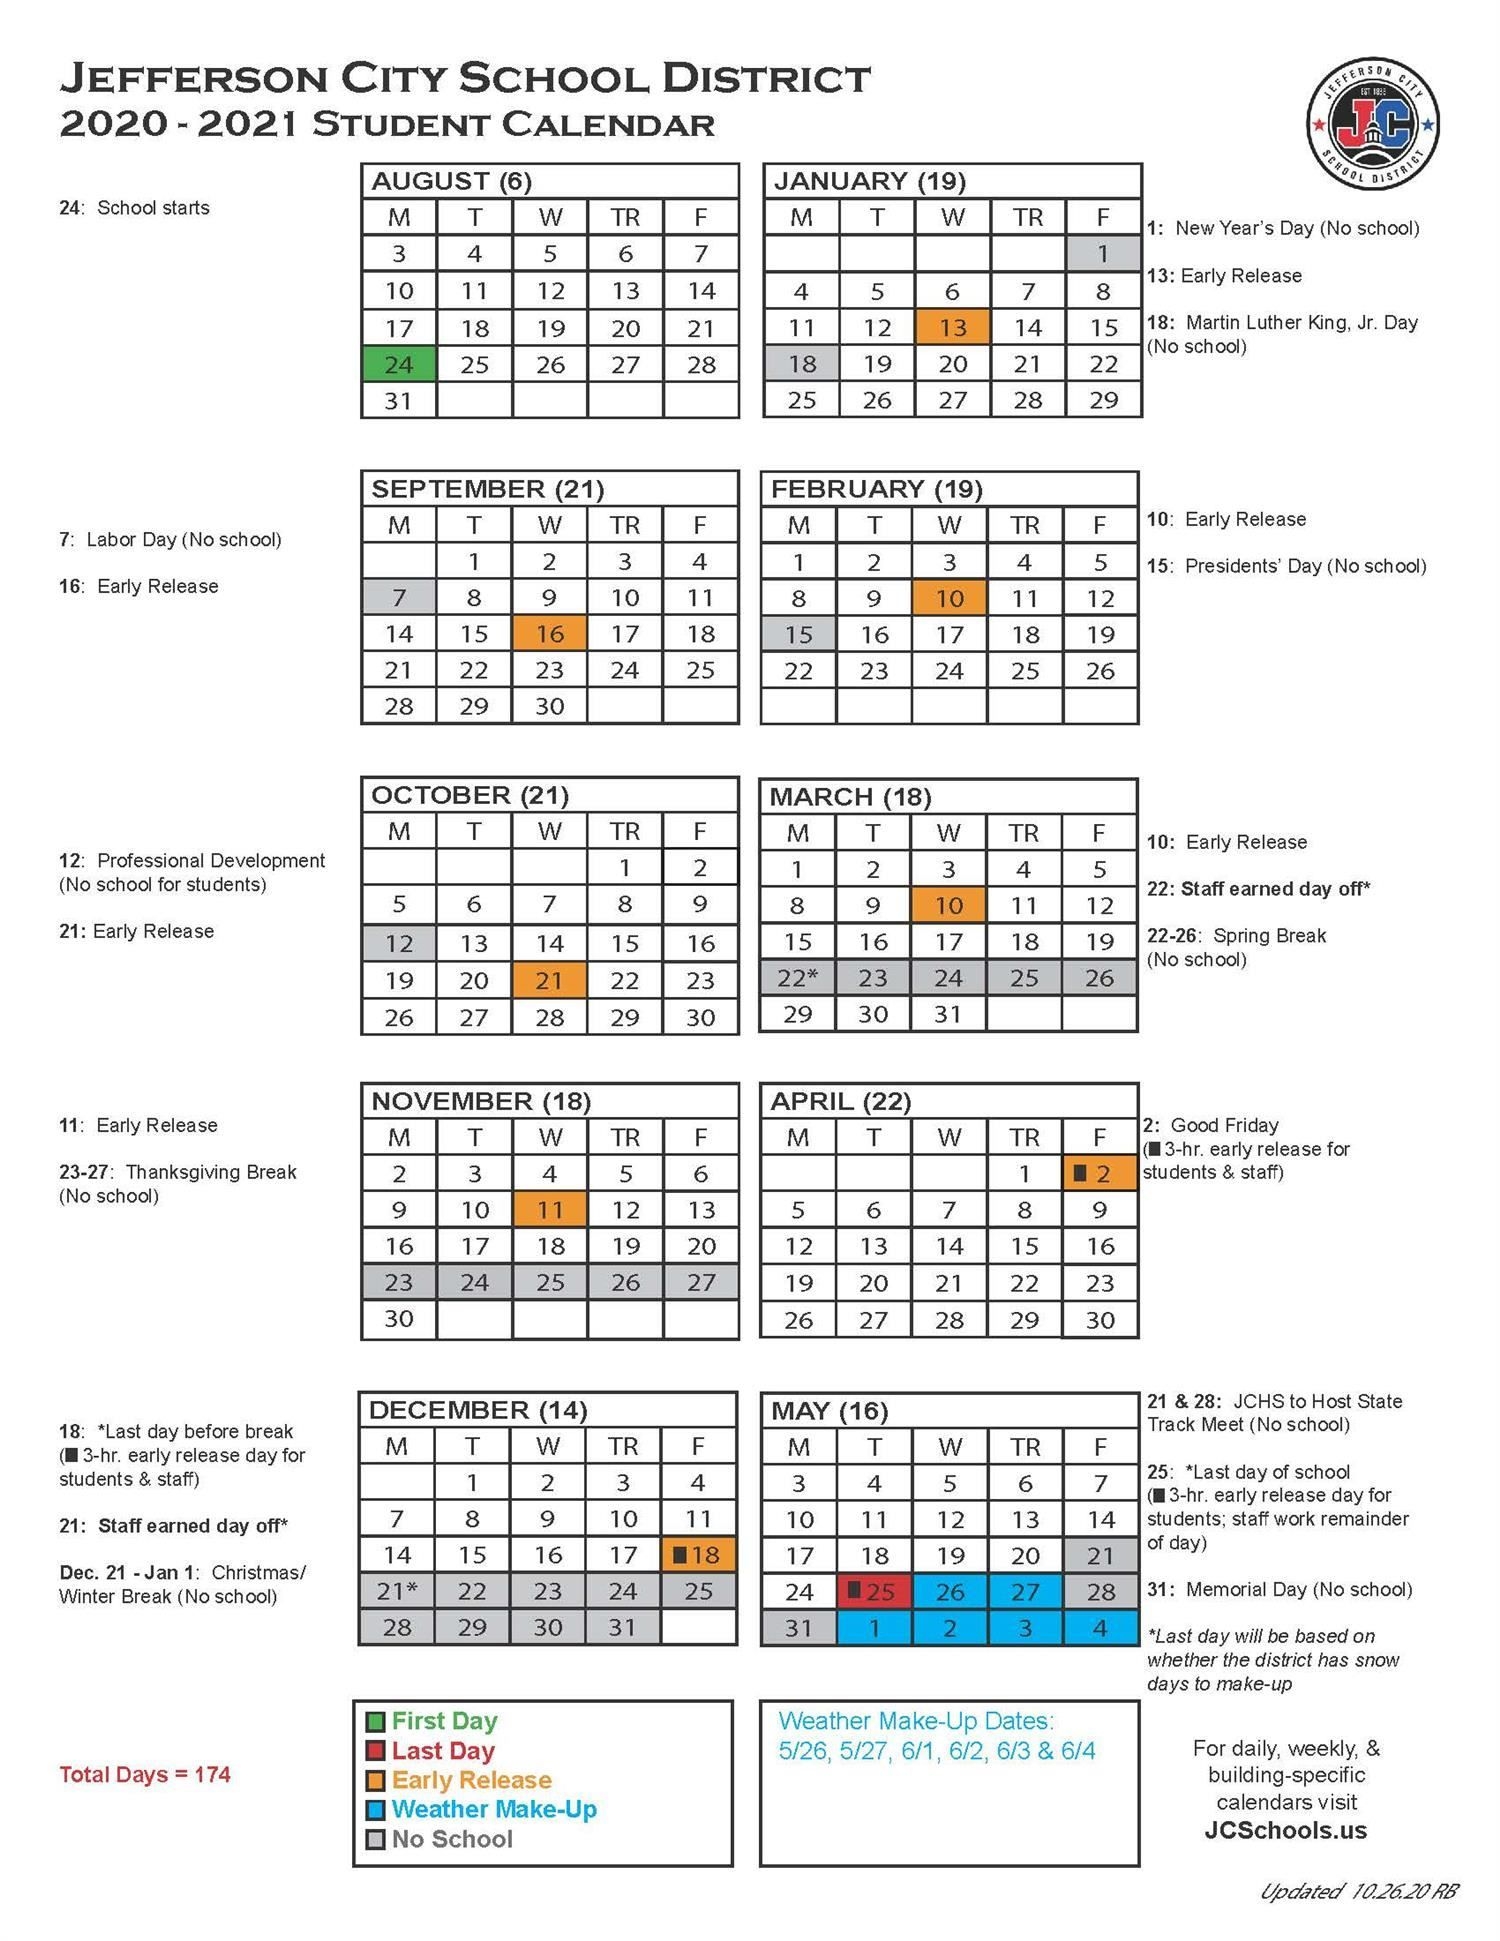 Annual District Calendar / 2020-2021 Student Calendar